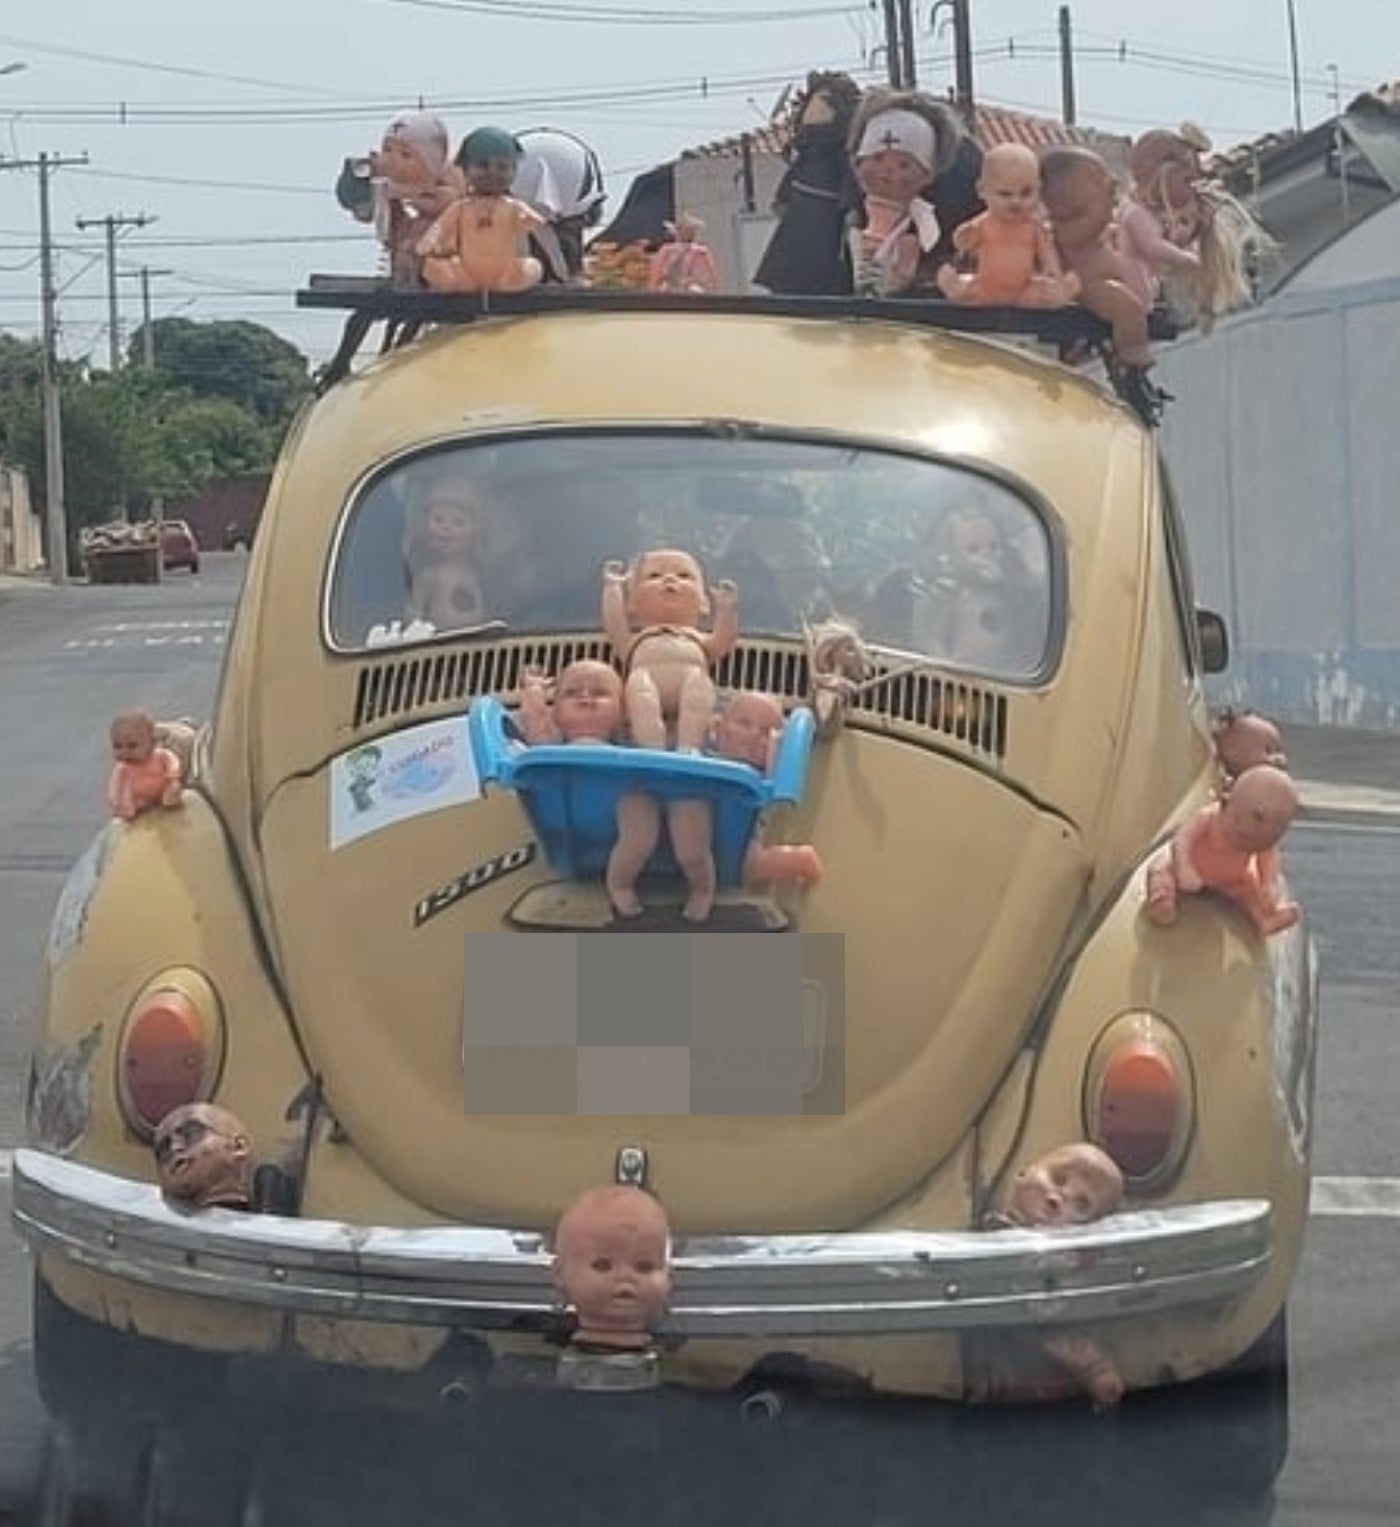 Dolls all over a car